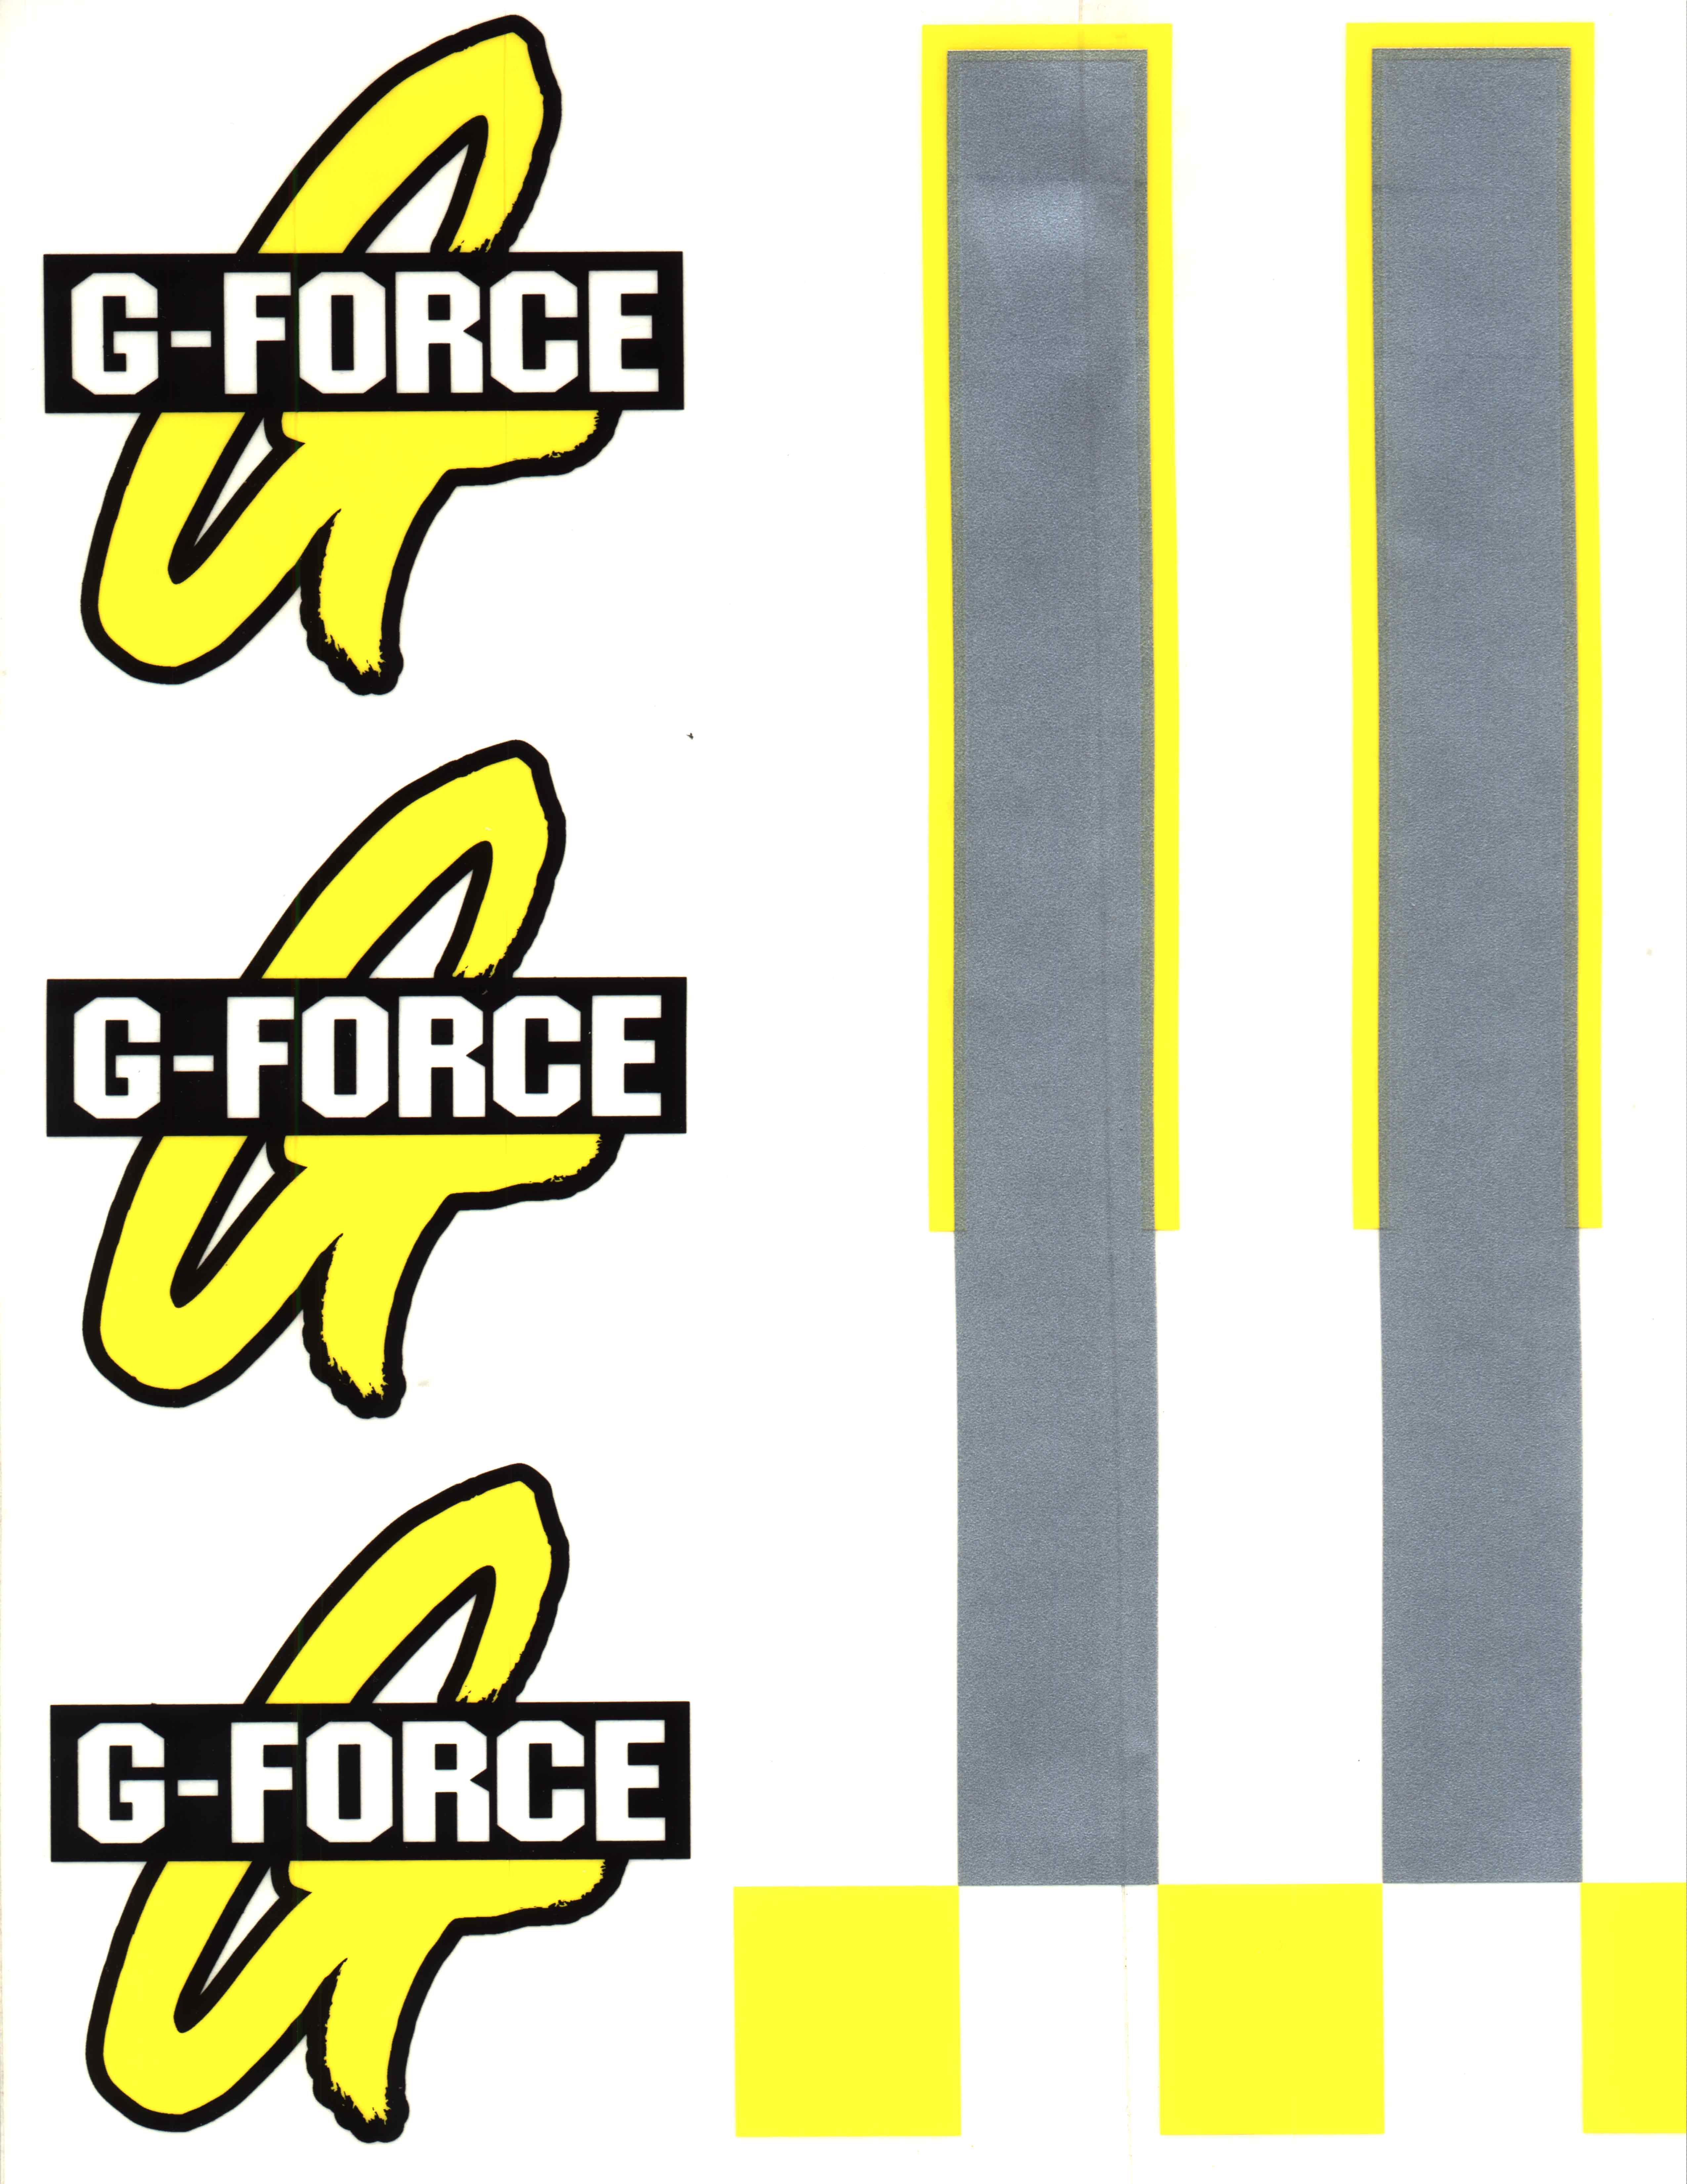 G-Force Image 1